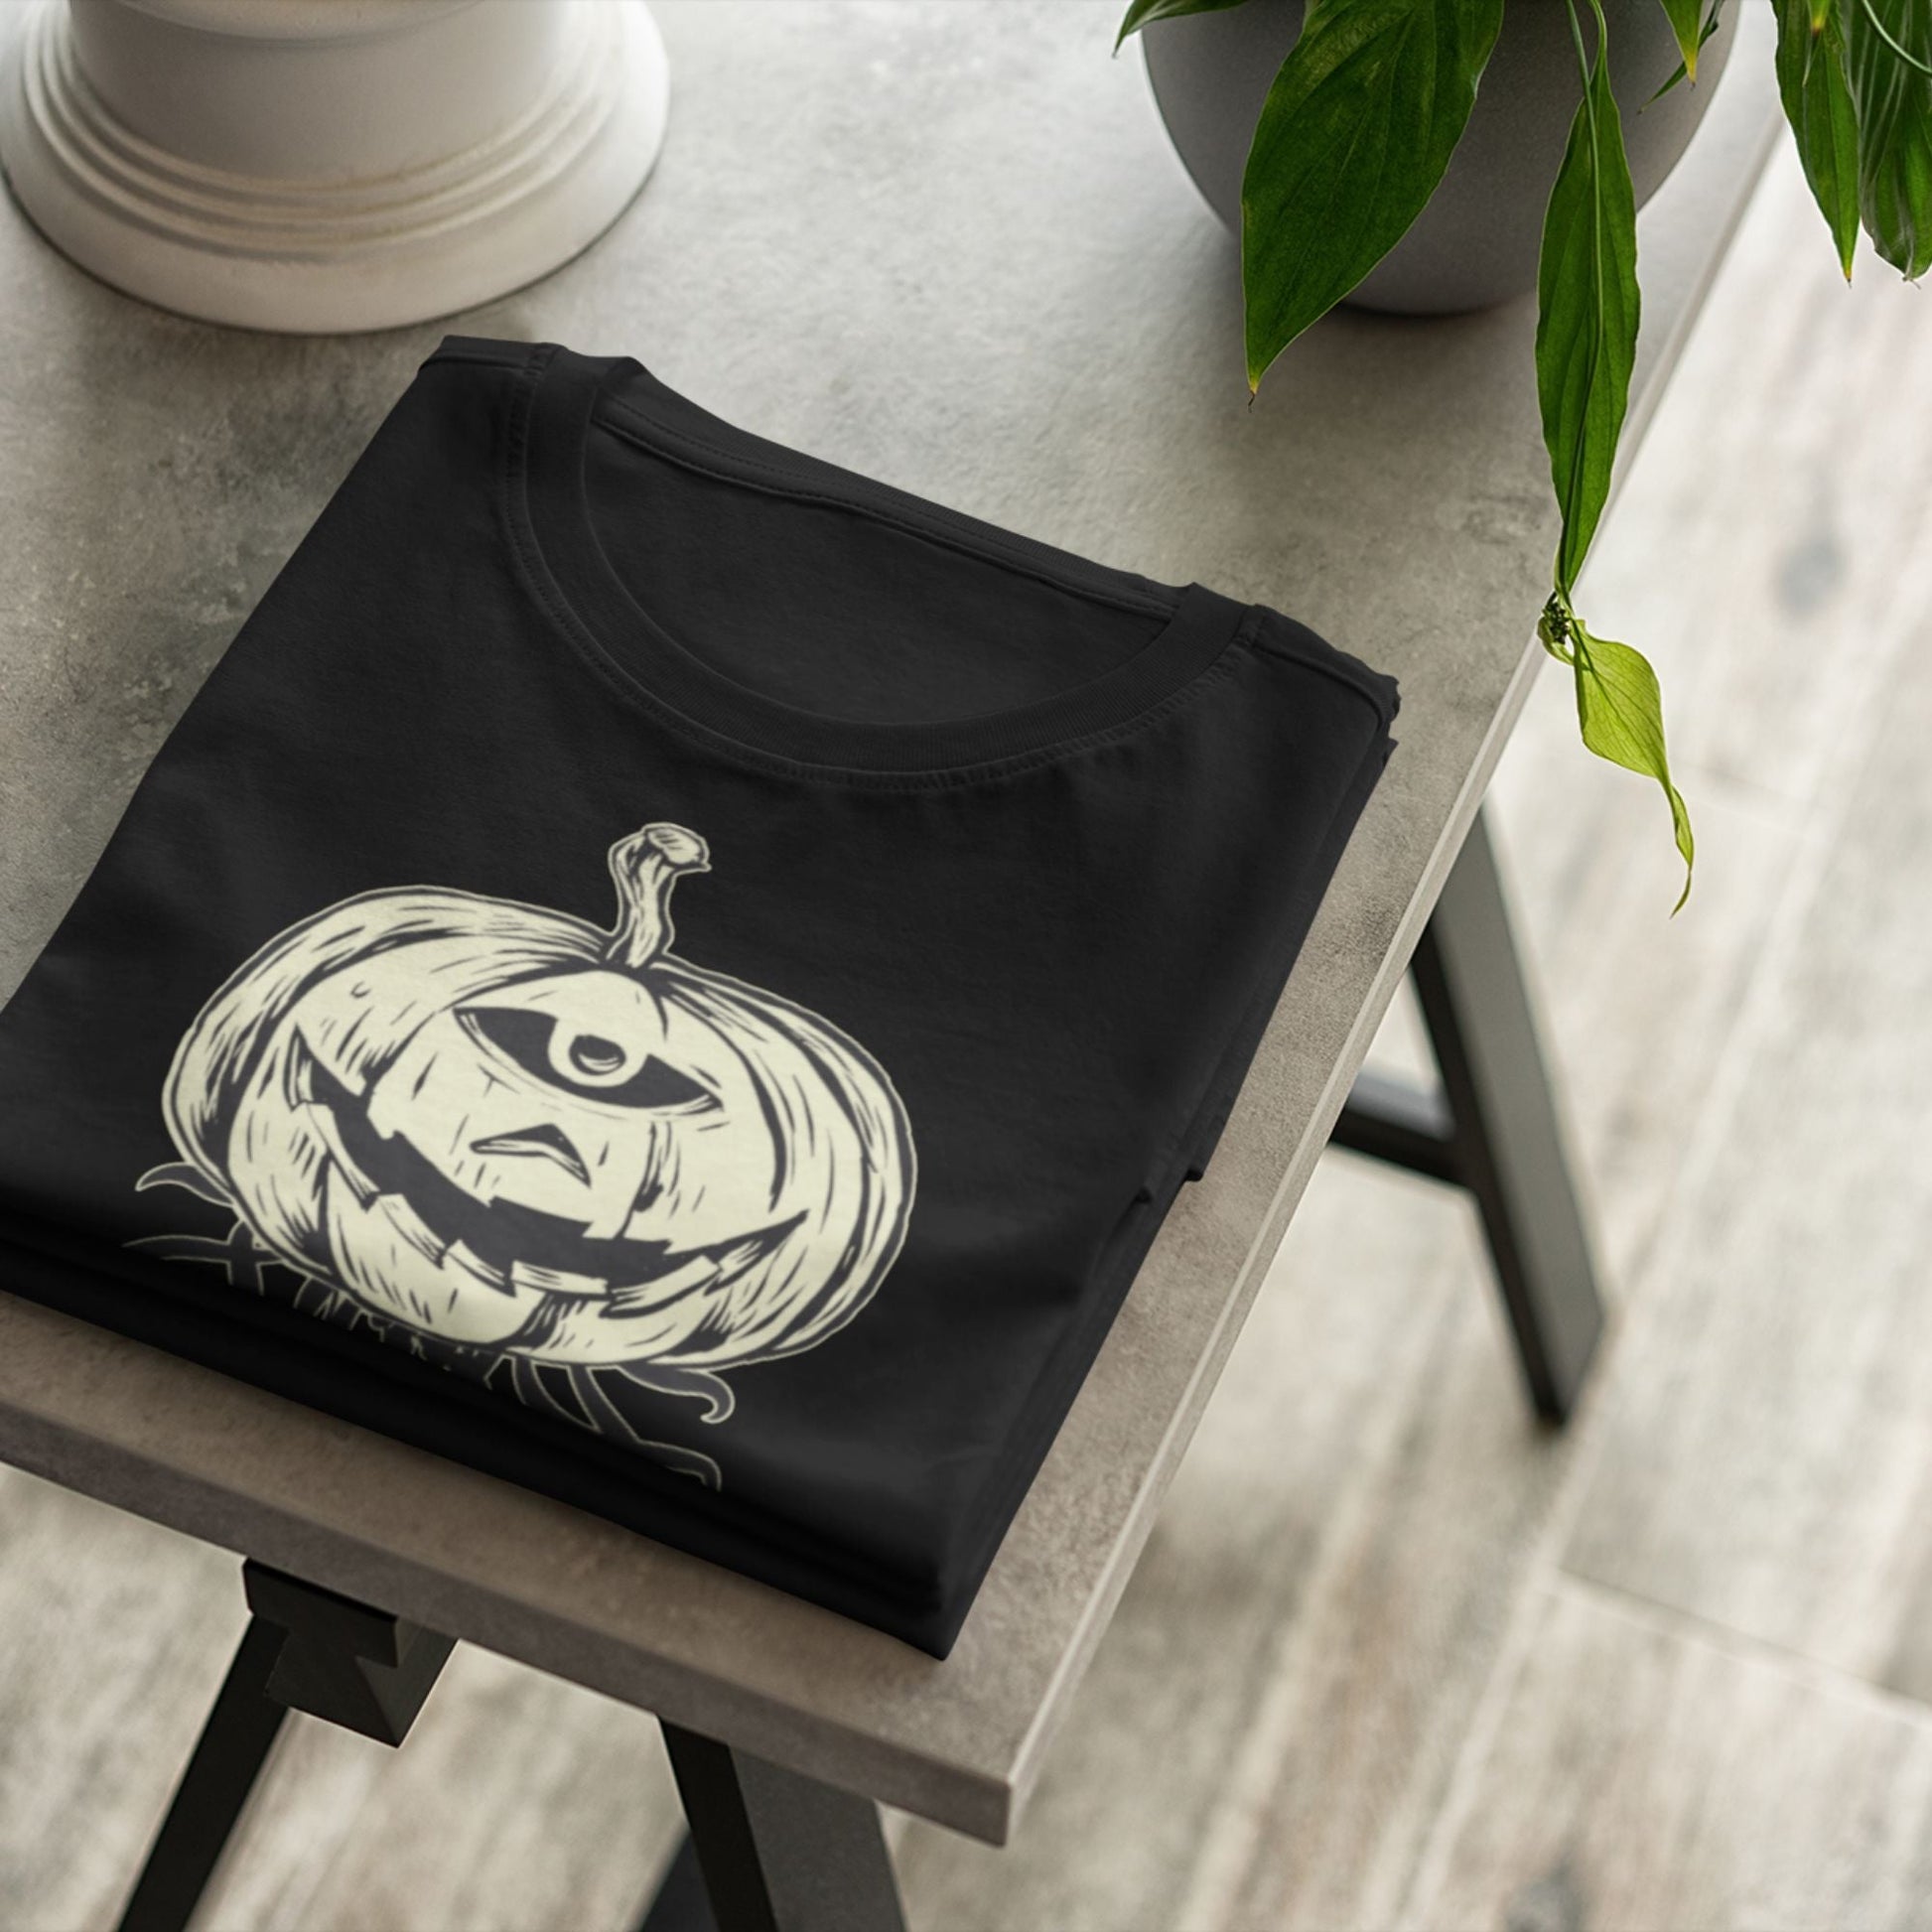 Pumpkin Jellyfish T-Shirt (Unisex)